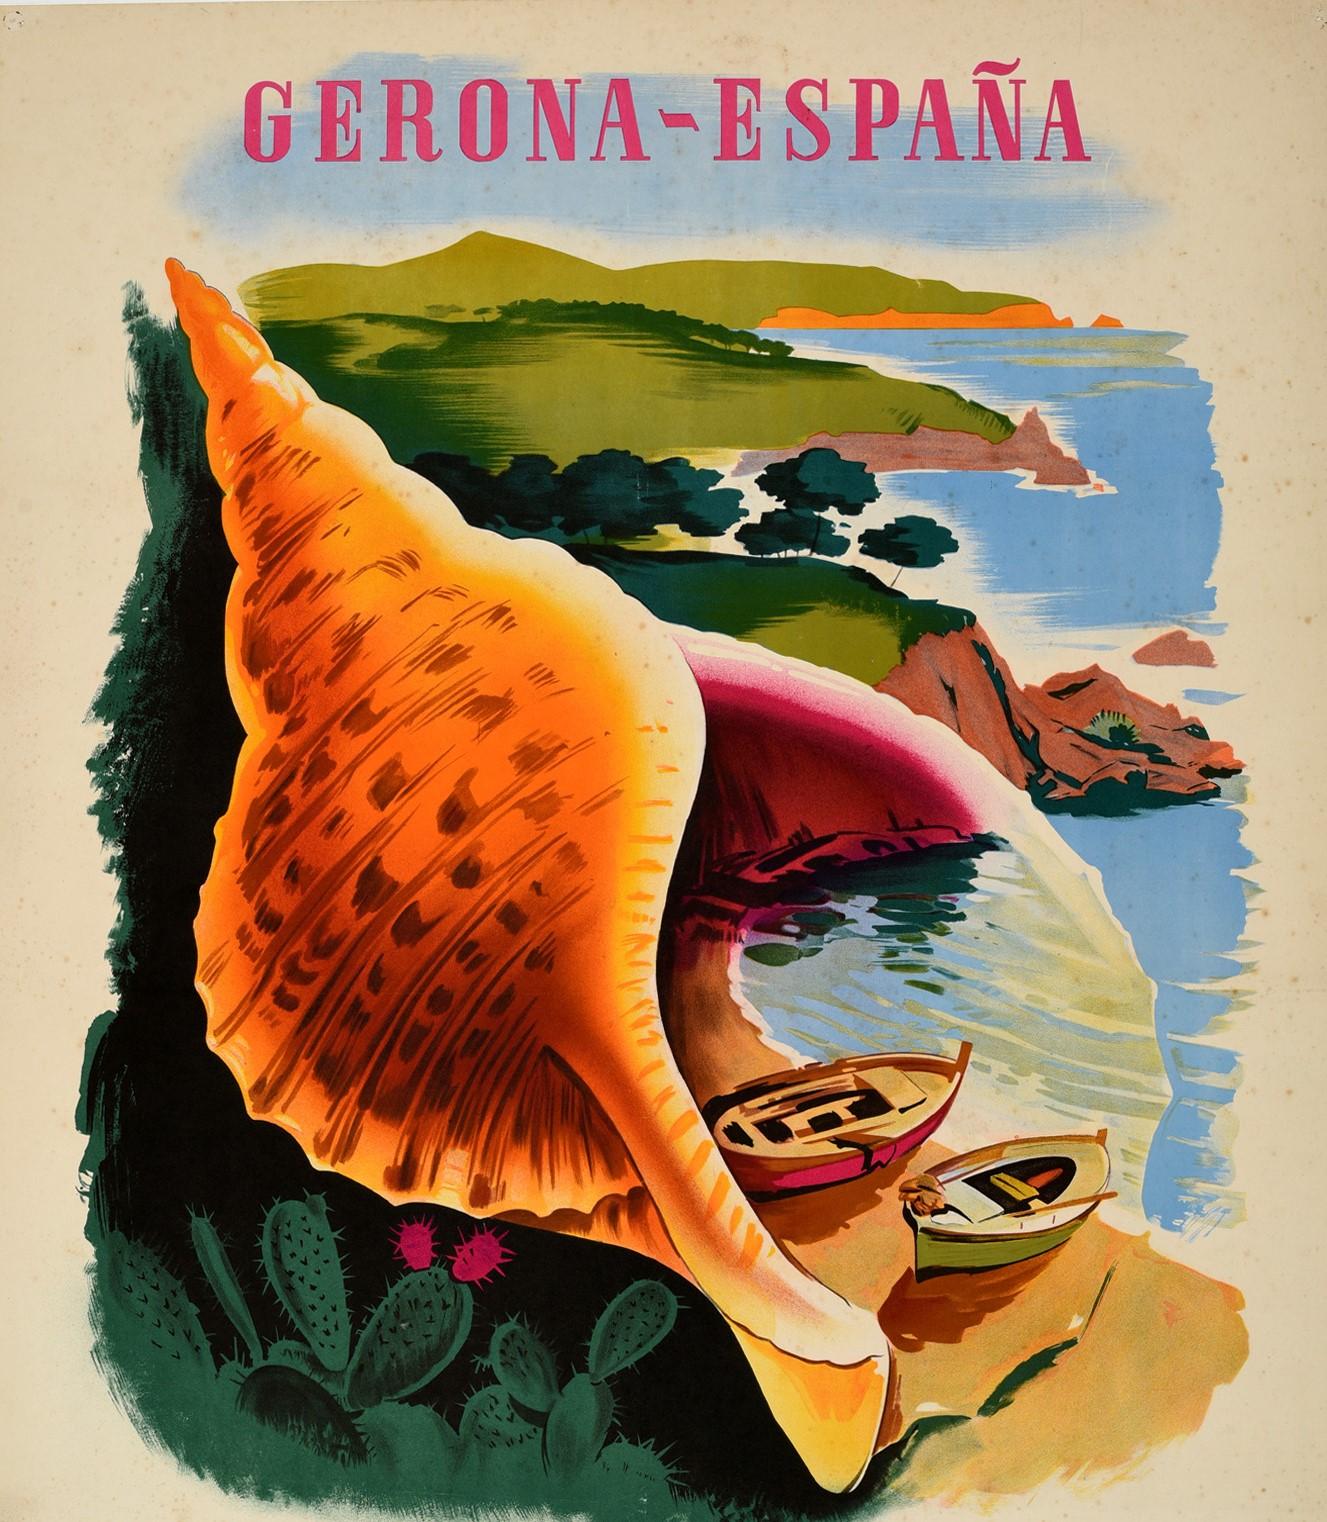 Original Vintage Travel Poster For Gerona Espana Mediterranean Costa Brava Spain - Print by Viza